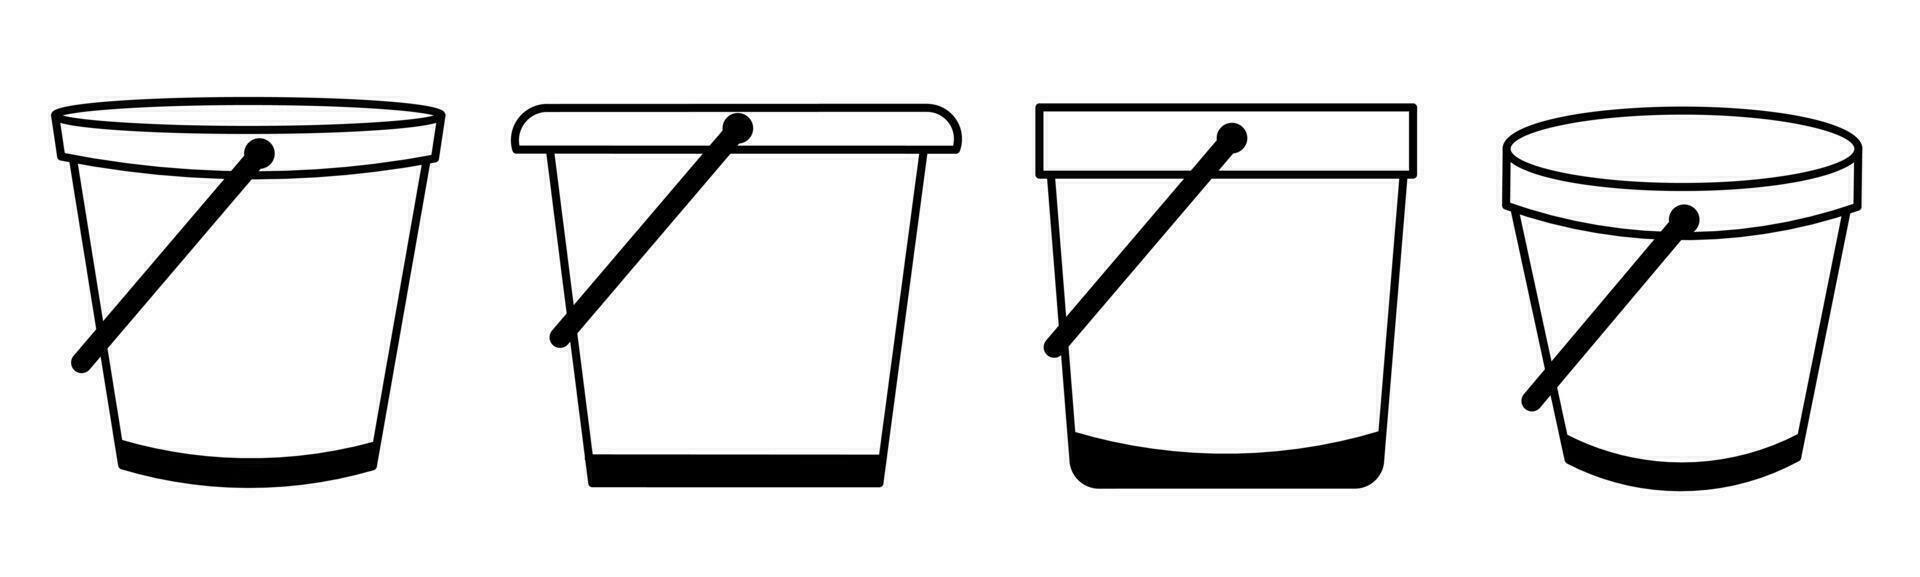 Bucket icon template. Stock vector illustration.